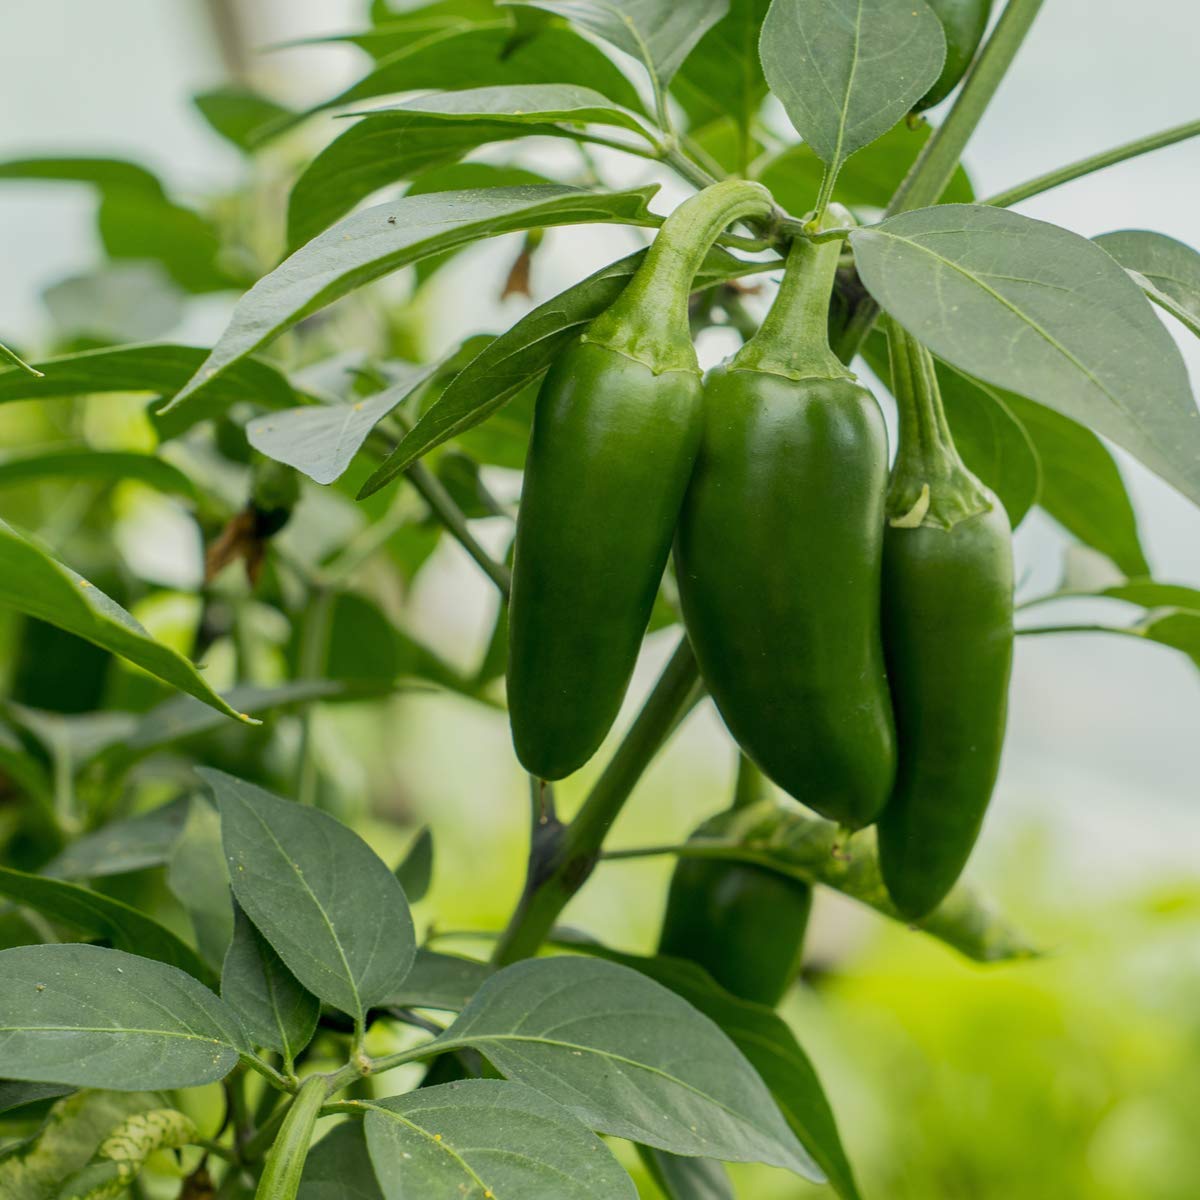 Chilli Pepper Plants - 'Giant Jalapeno' - 12 x Plug Plant Pack - AcquaGarden